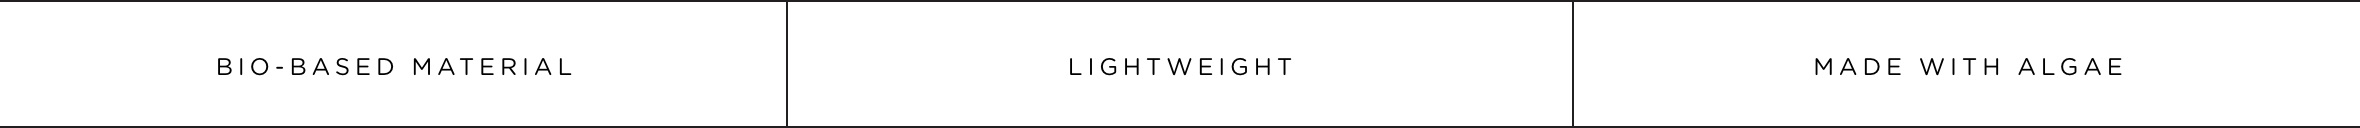 BIO-BASED MATERIAL | LIGHTWEIGHT | MADE WITH ALGAE